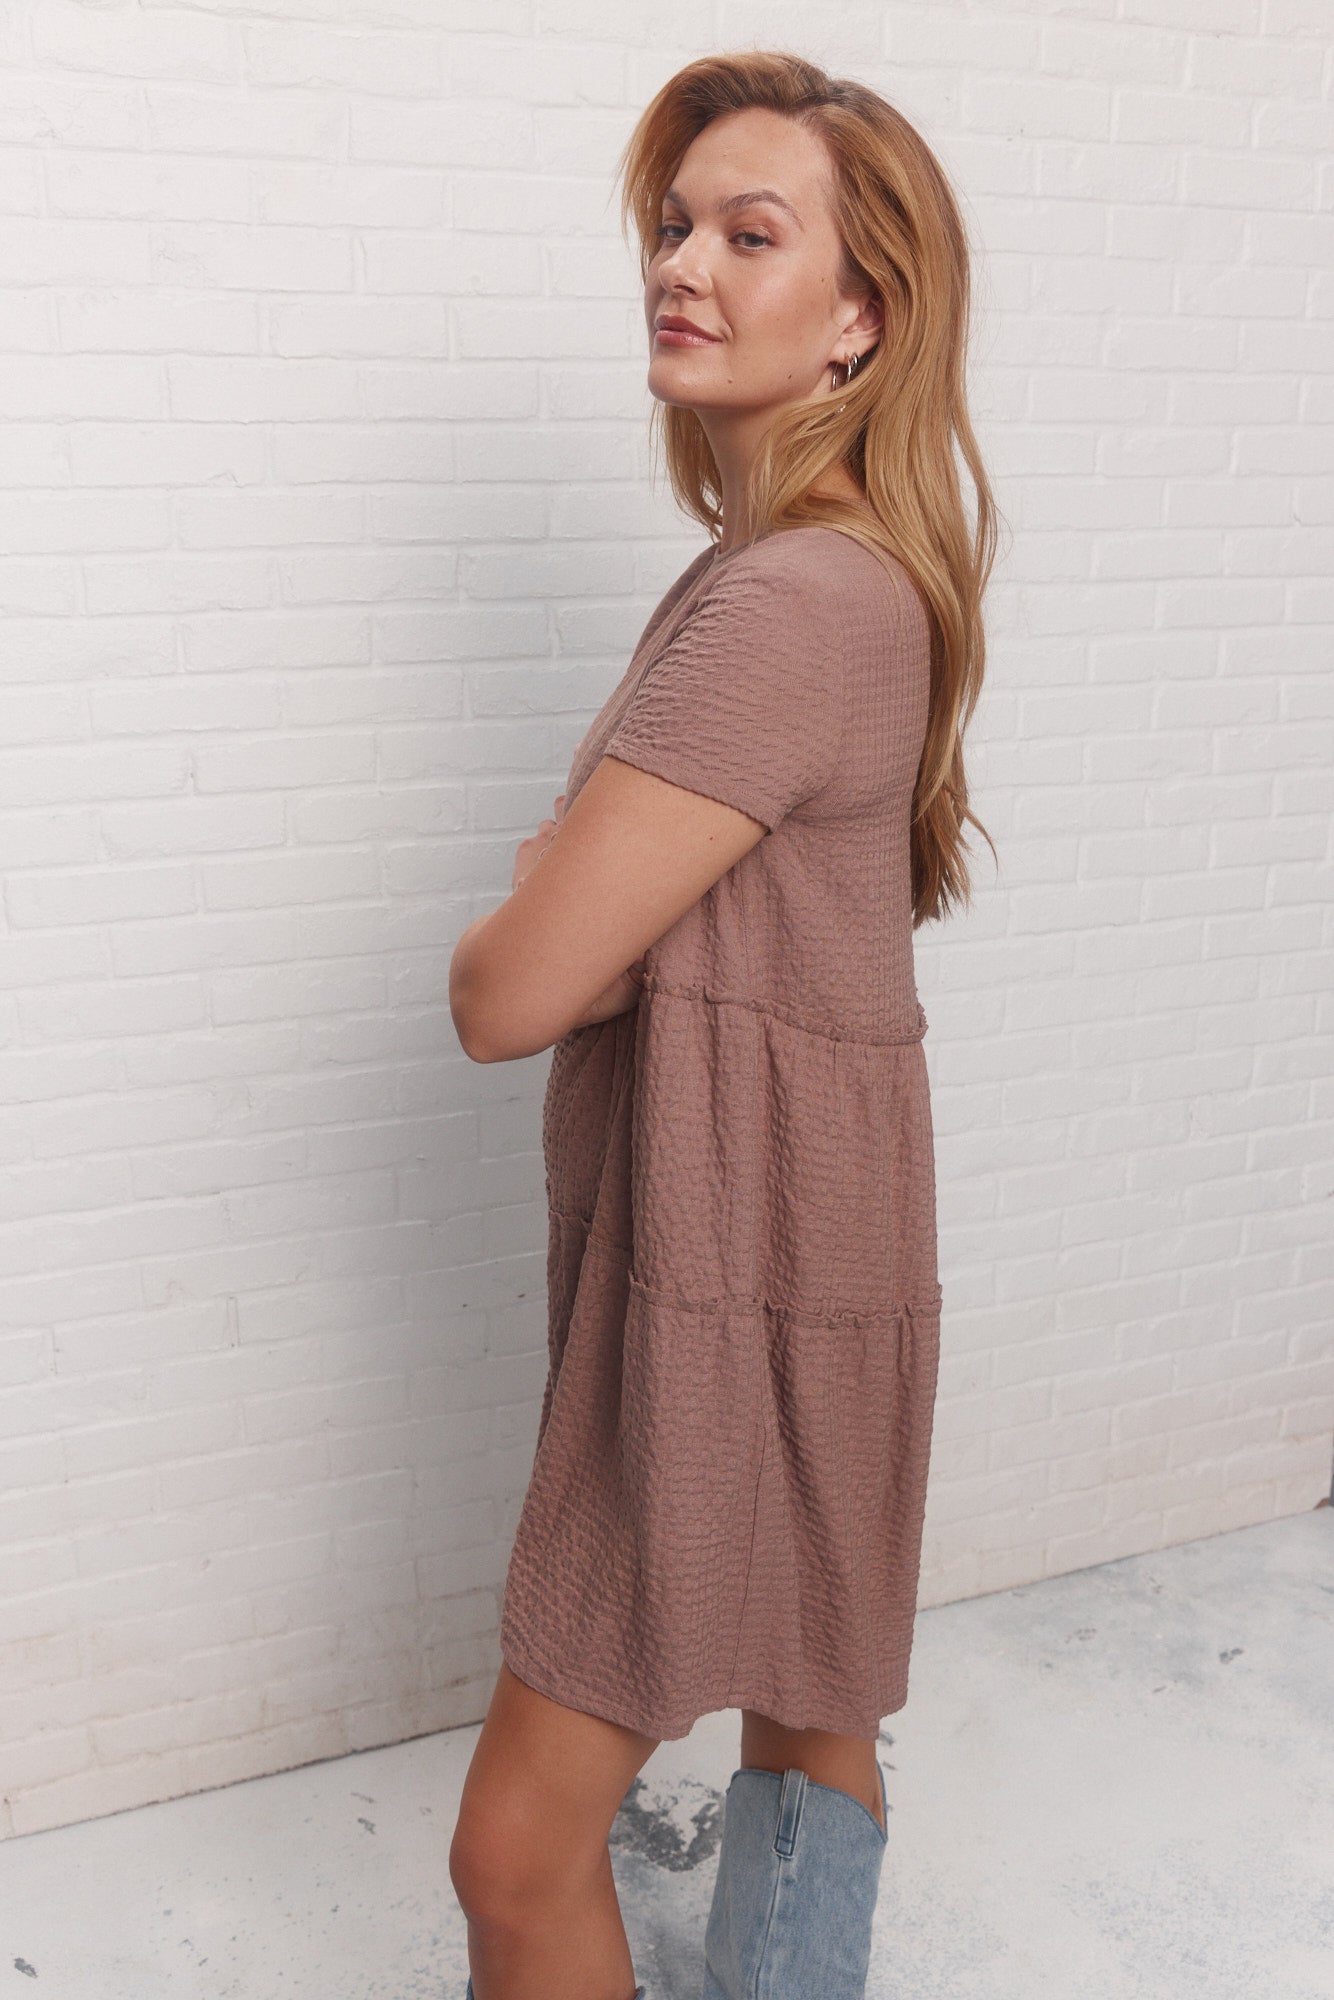 Short sleeve brown dress | Nori